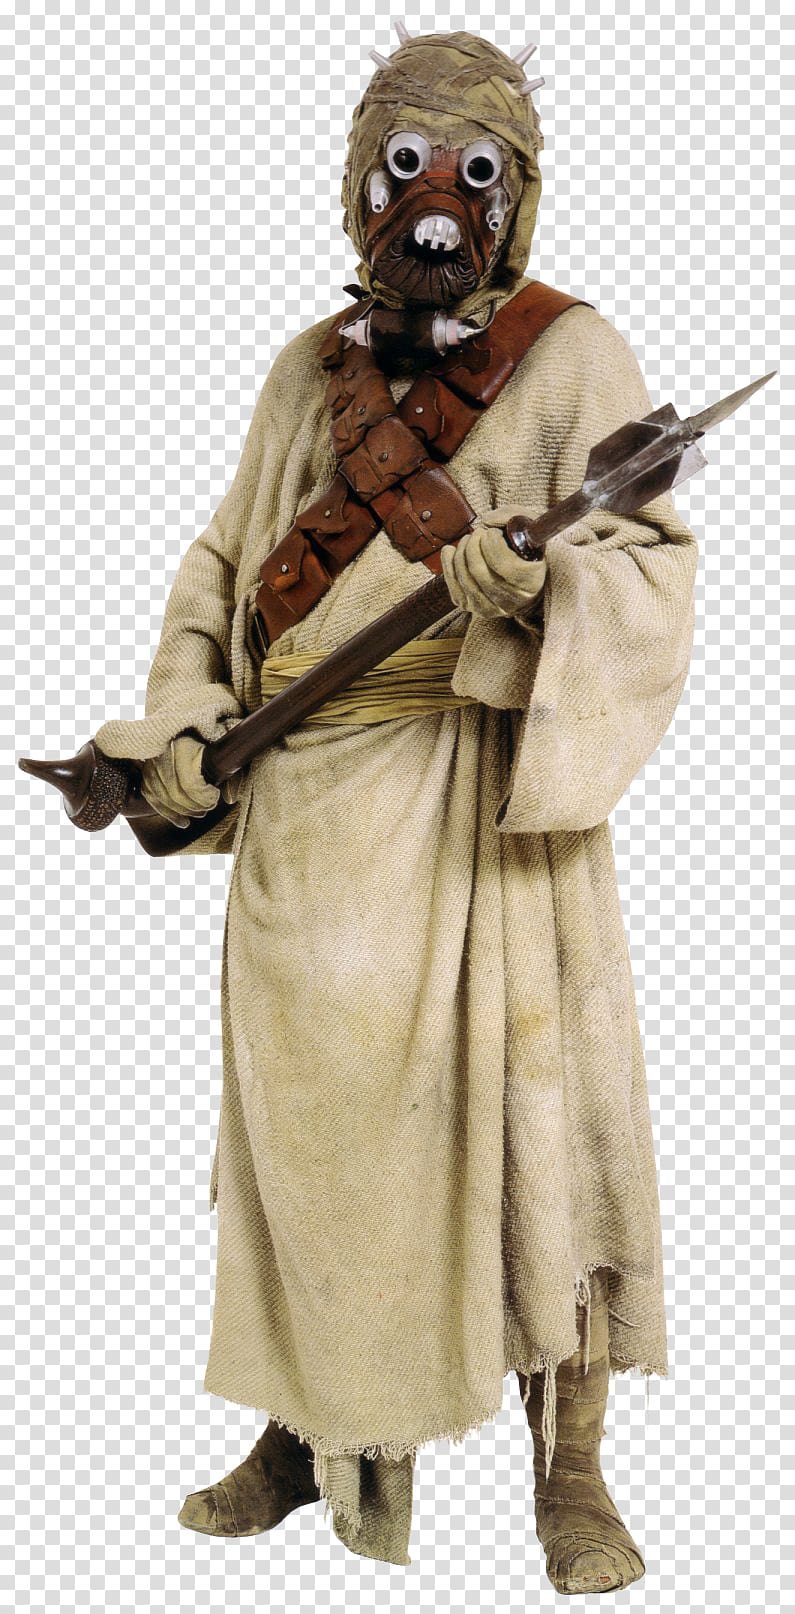 Luke Skywalker Tusken Raiders Chewbacca Star Wars Boba Fett, millenium falcon transparent background PNG clipart